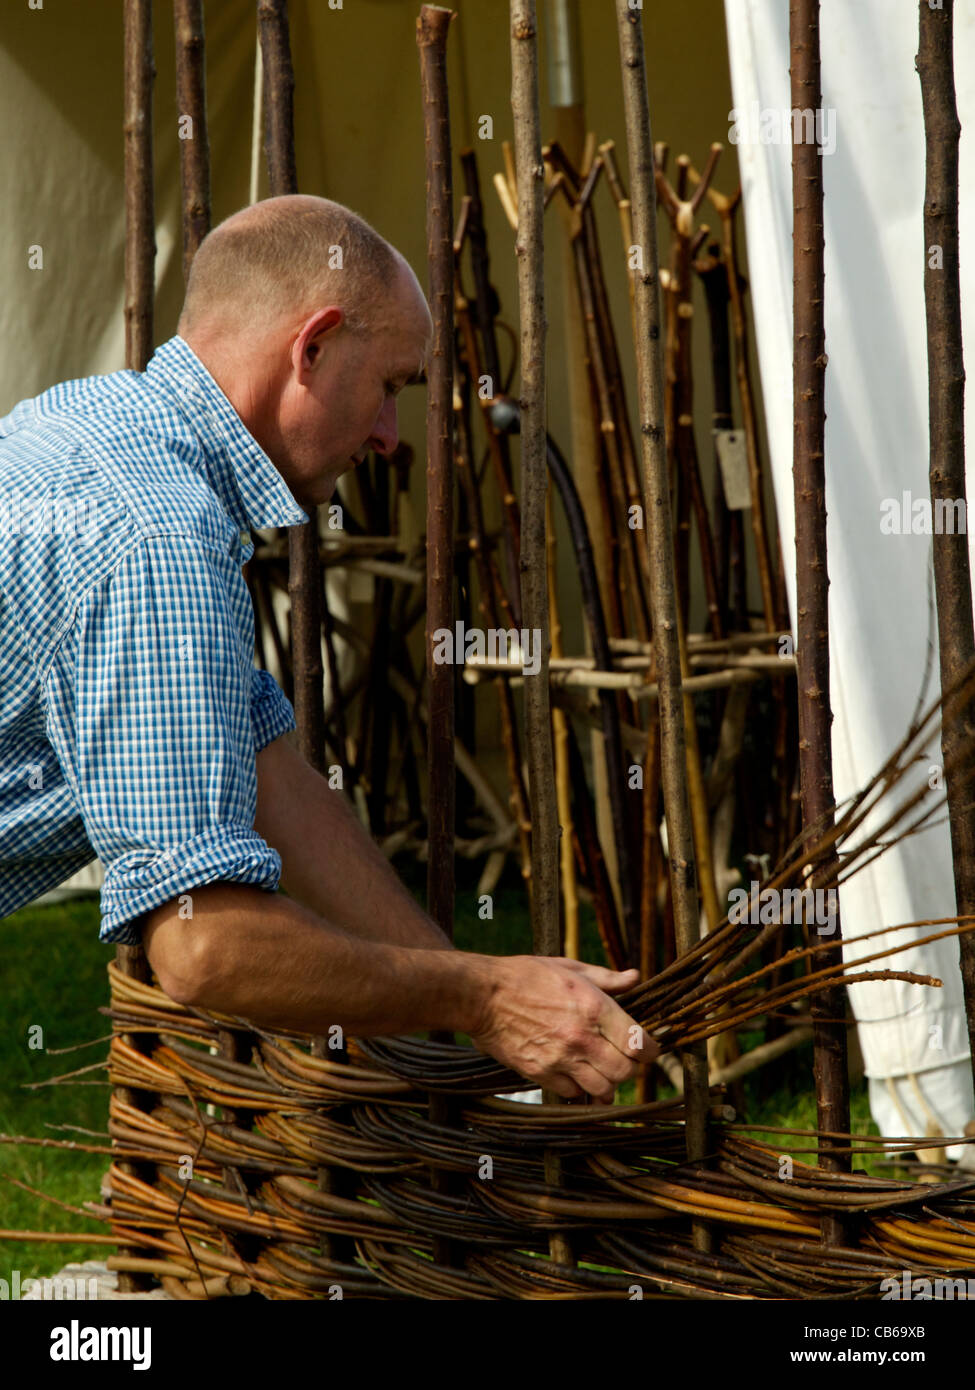 Traditional craftsman making willow hurdles Stock Photo